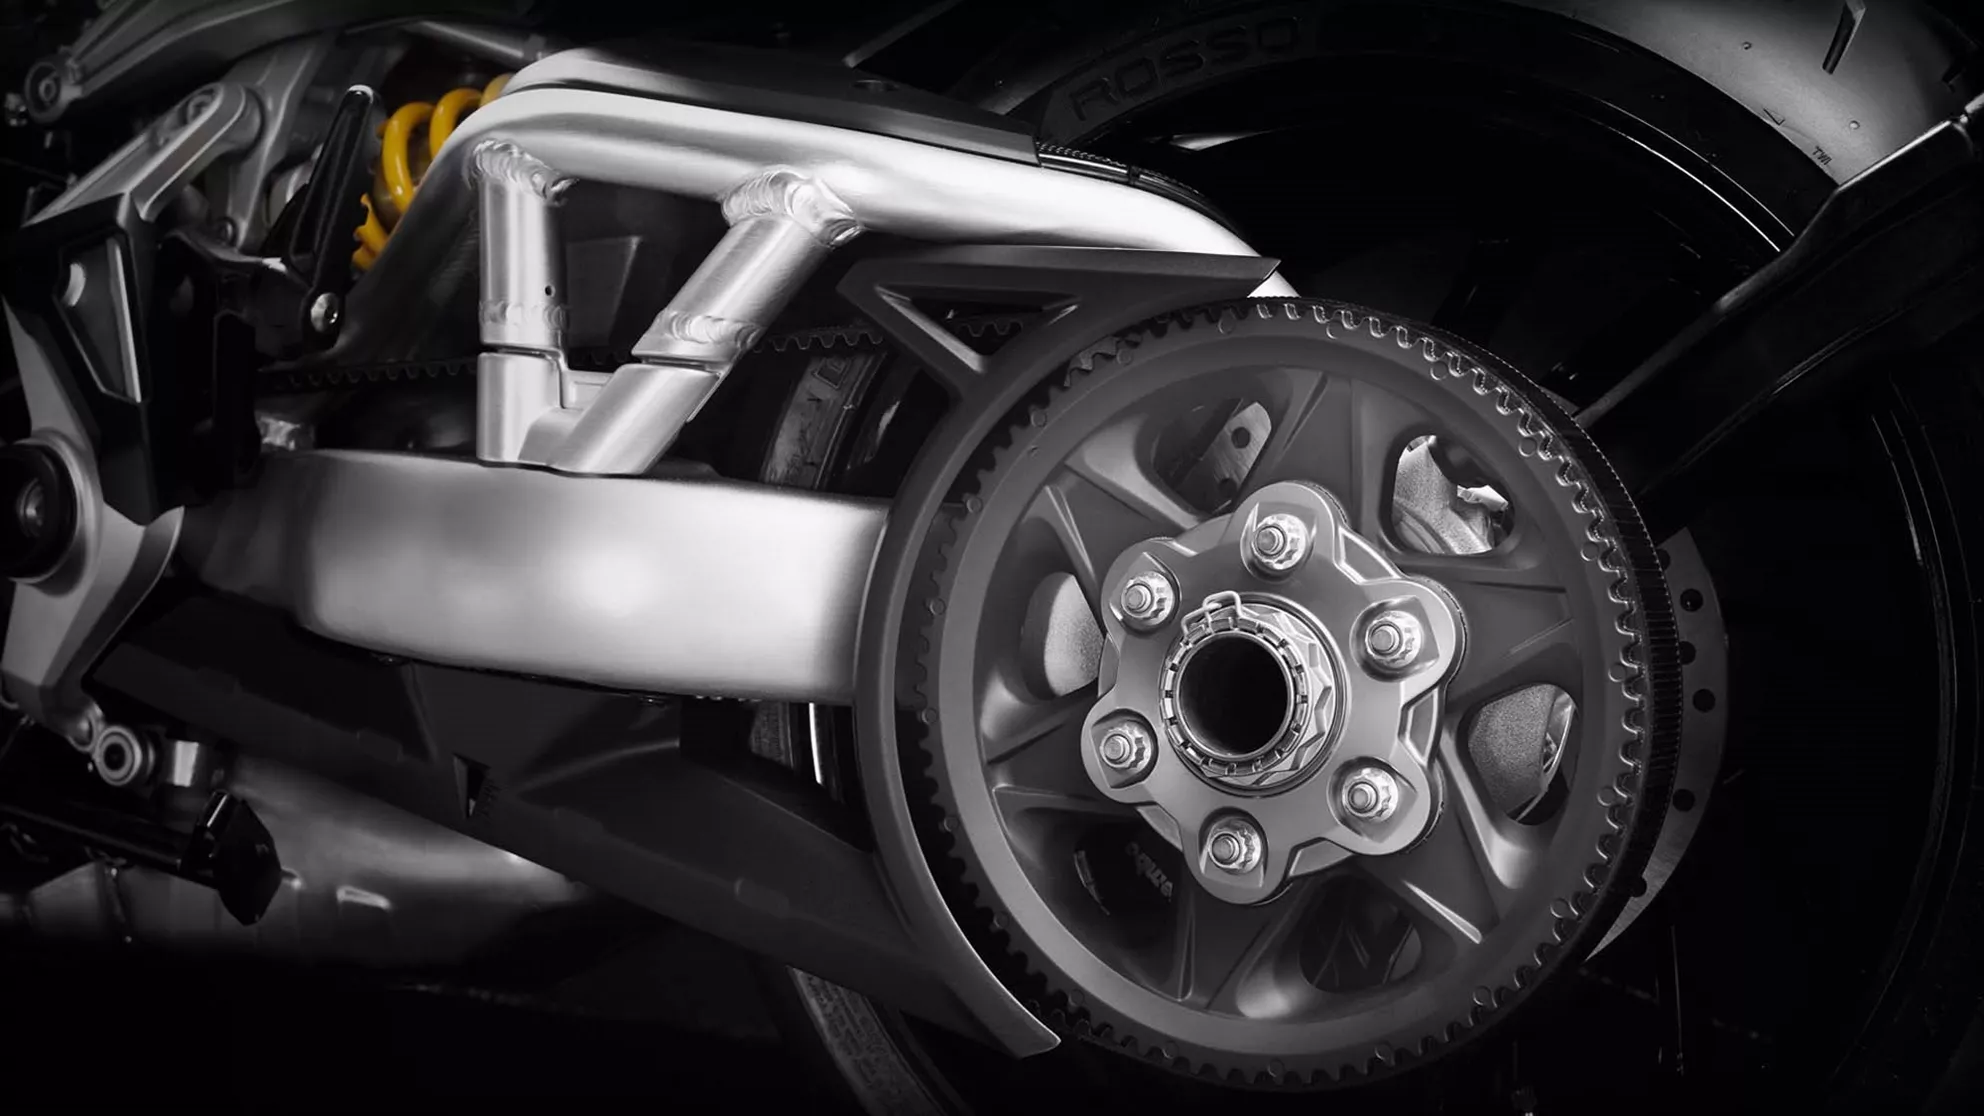 Ducati XDiavel - Image 6